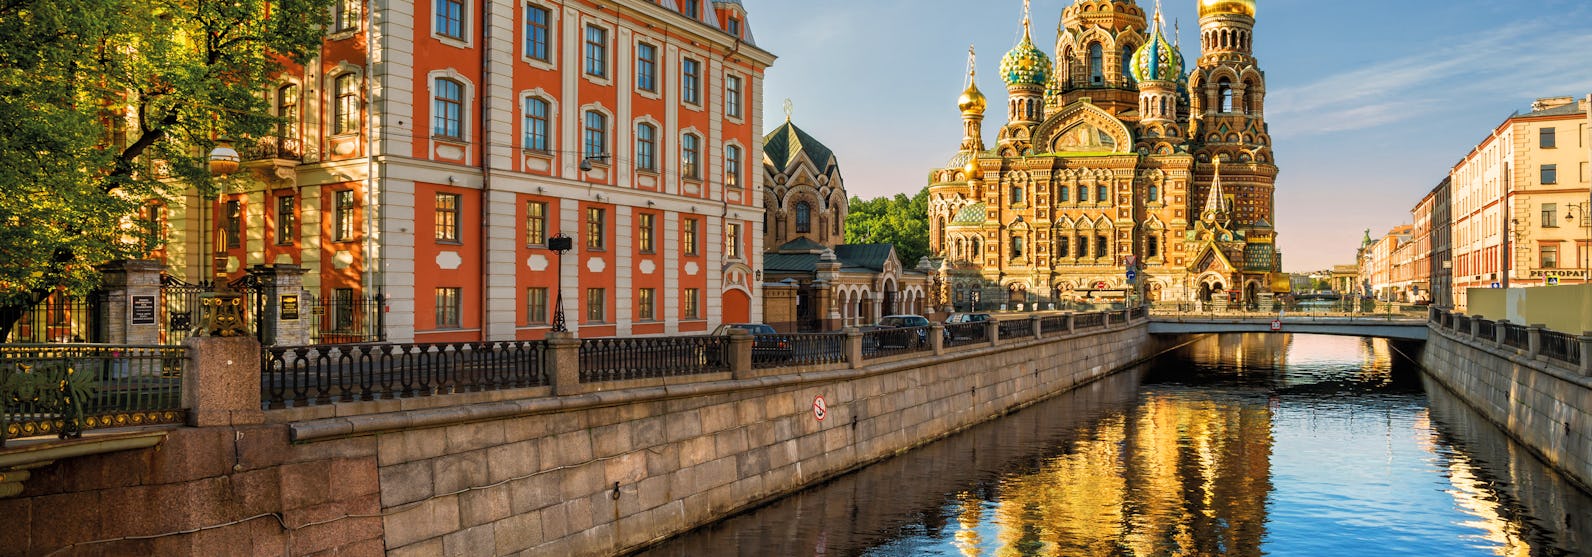 St-Petersburg-Russia-Baltics